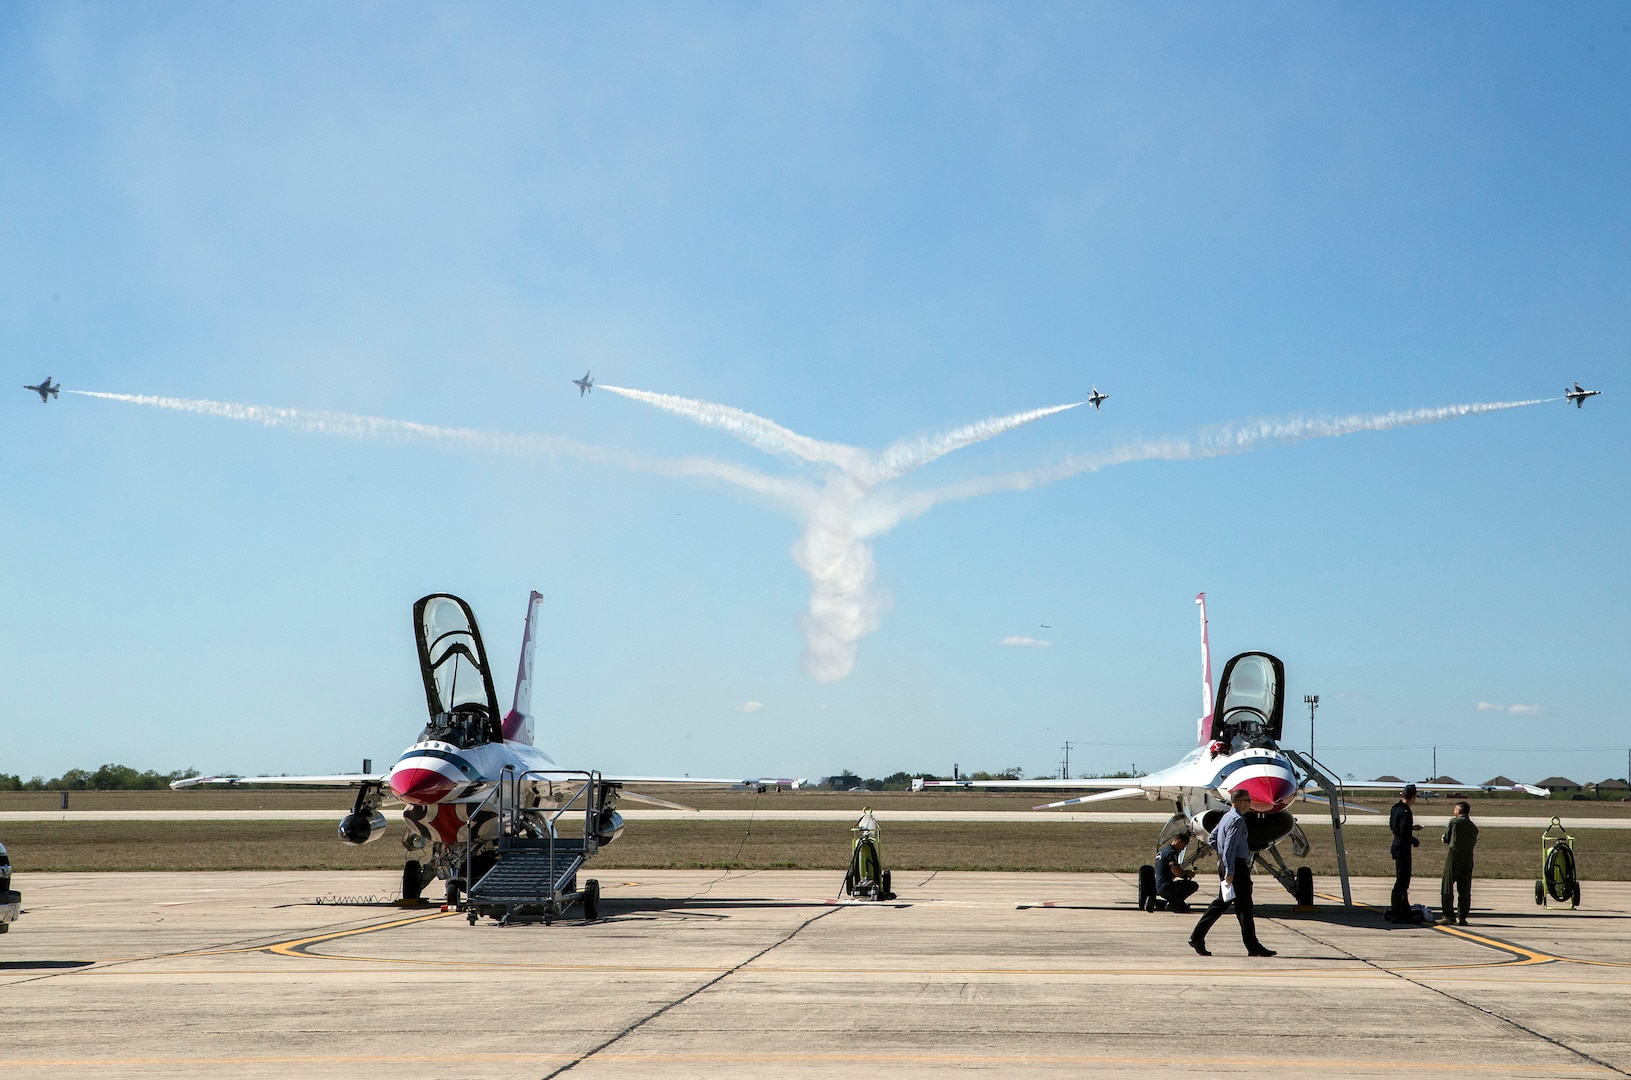 Thunderbirds touch down at JBSARandolph for air show > Joint Base San